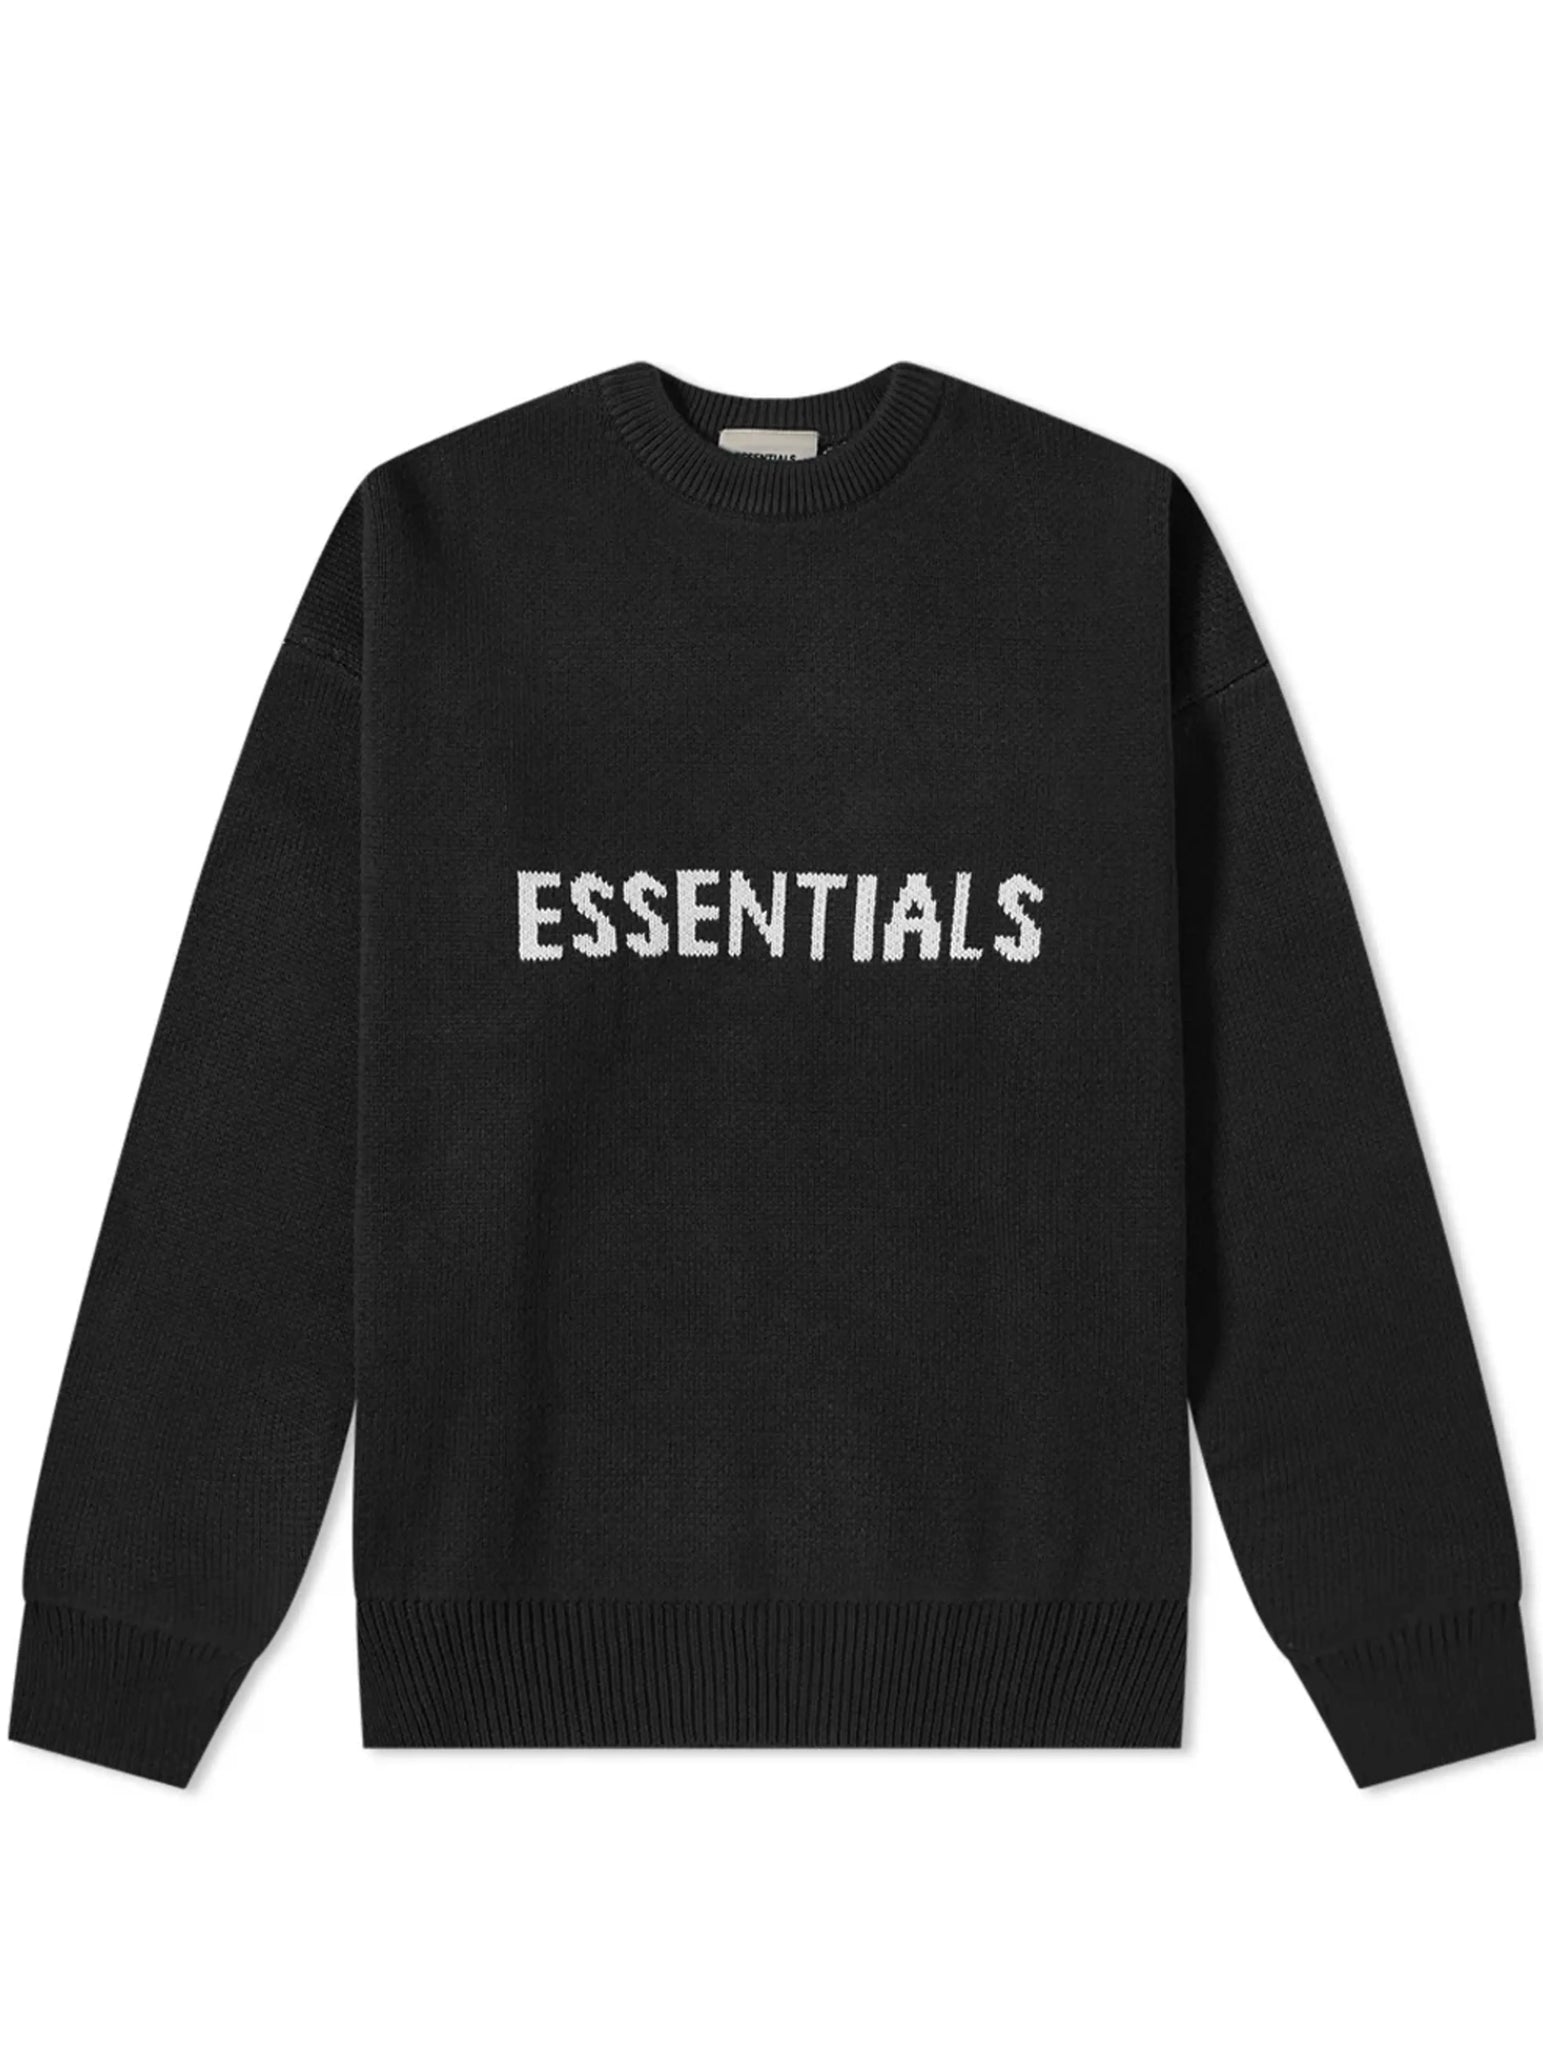 Fear of God Essentials Knit Sweater Dark Slate/Stretch Limo/Black [SS20] Prior